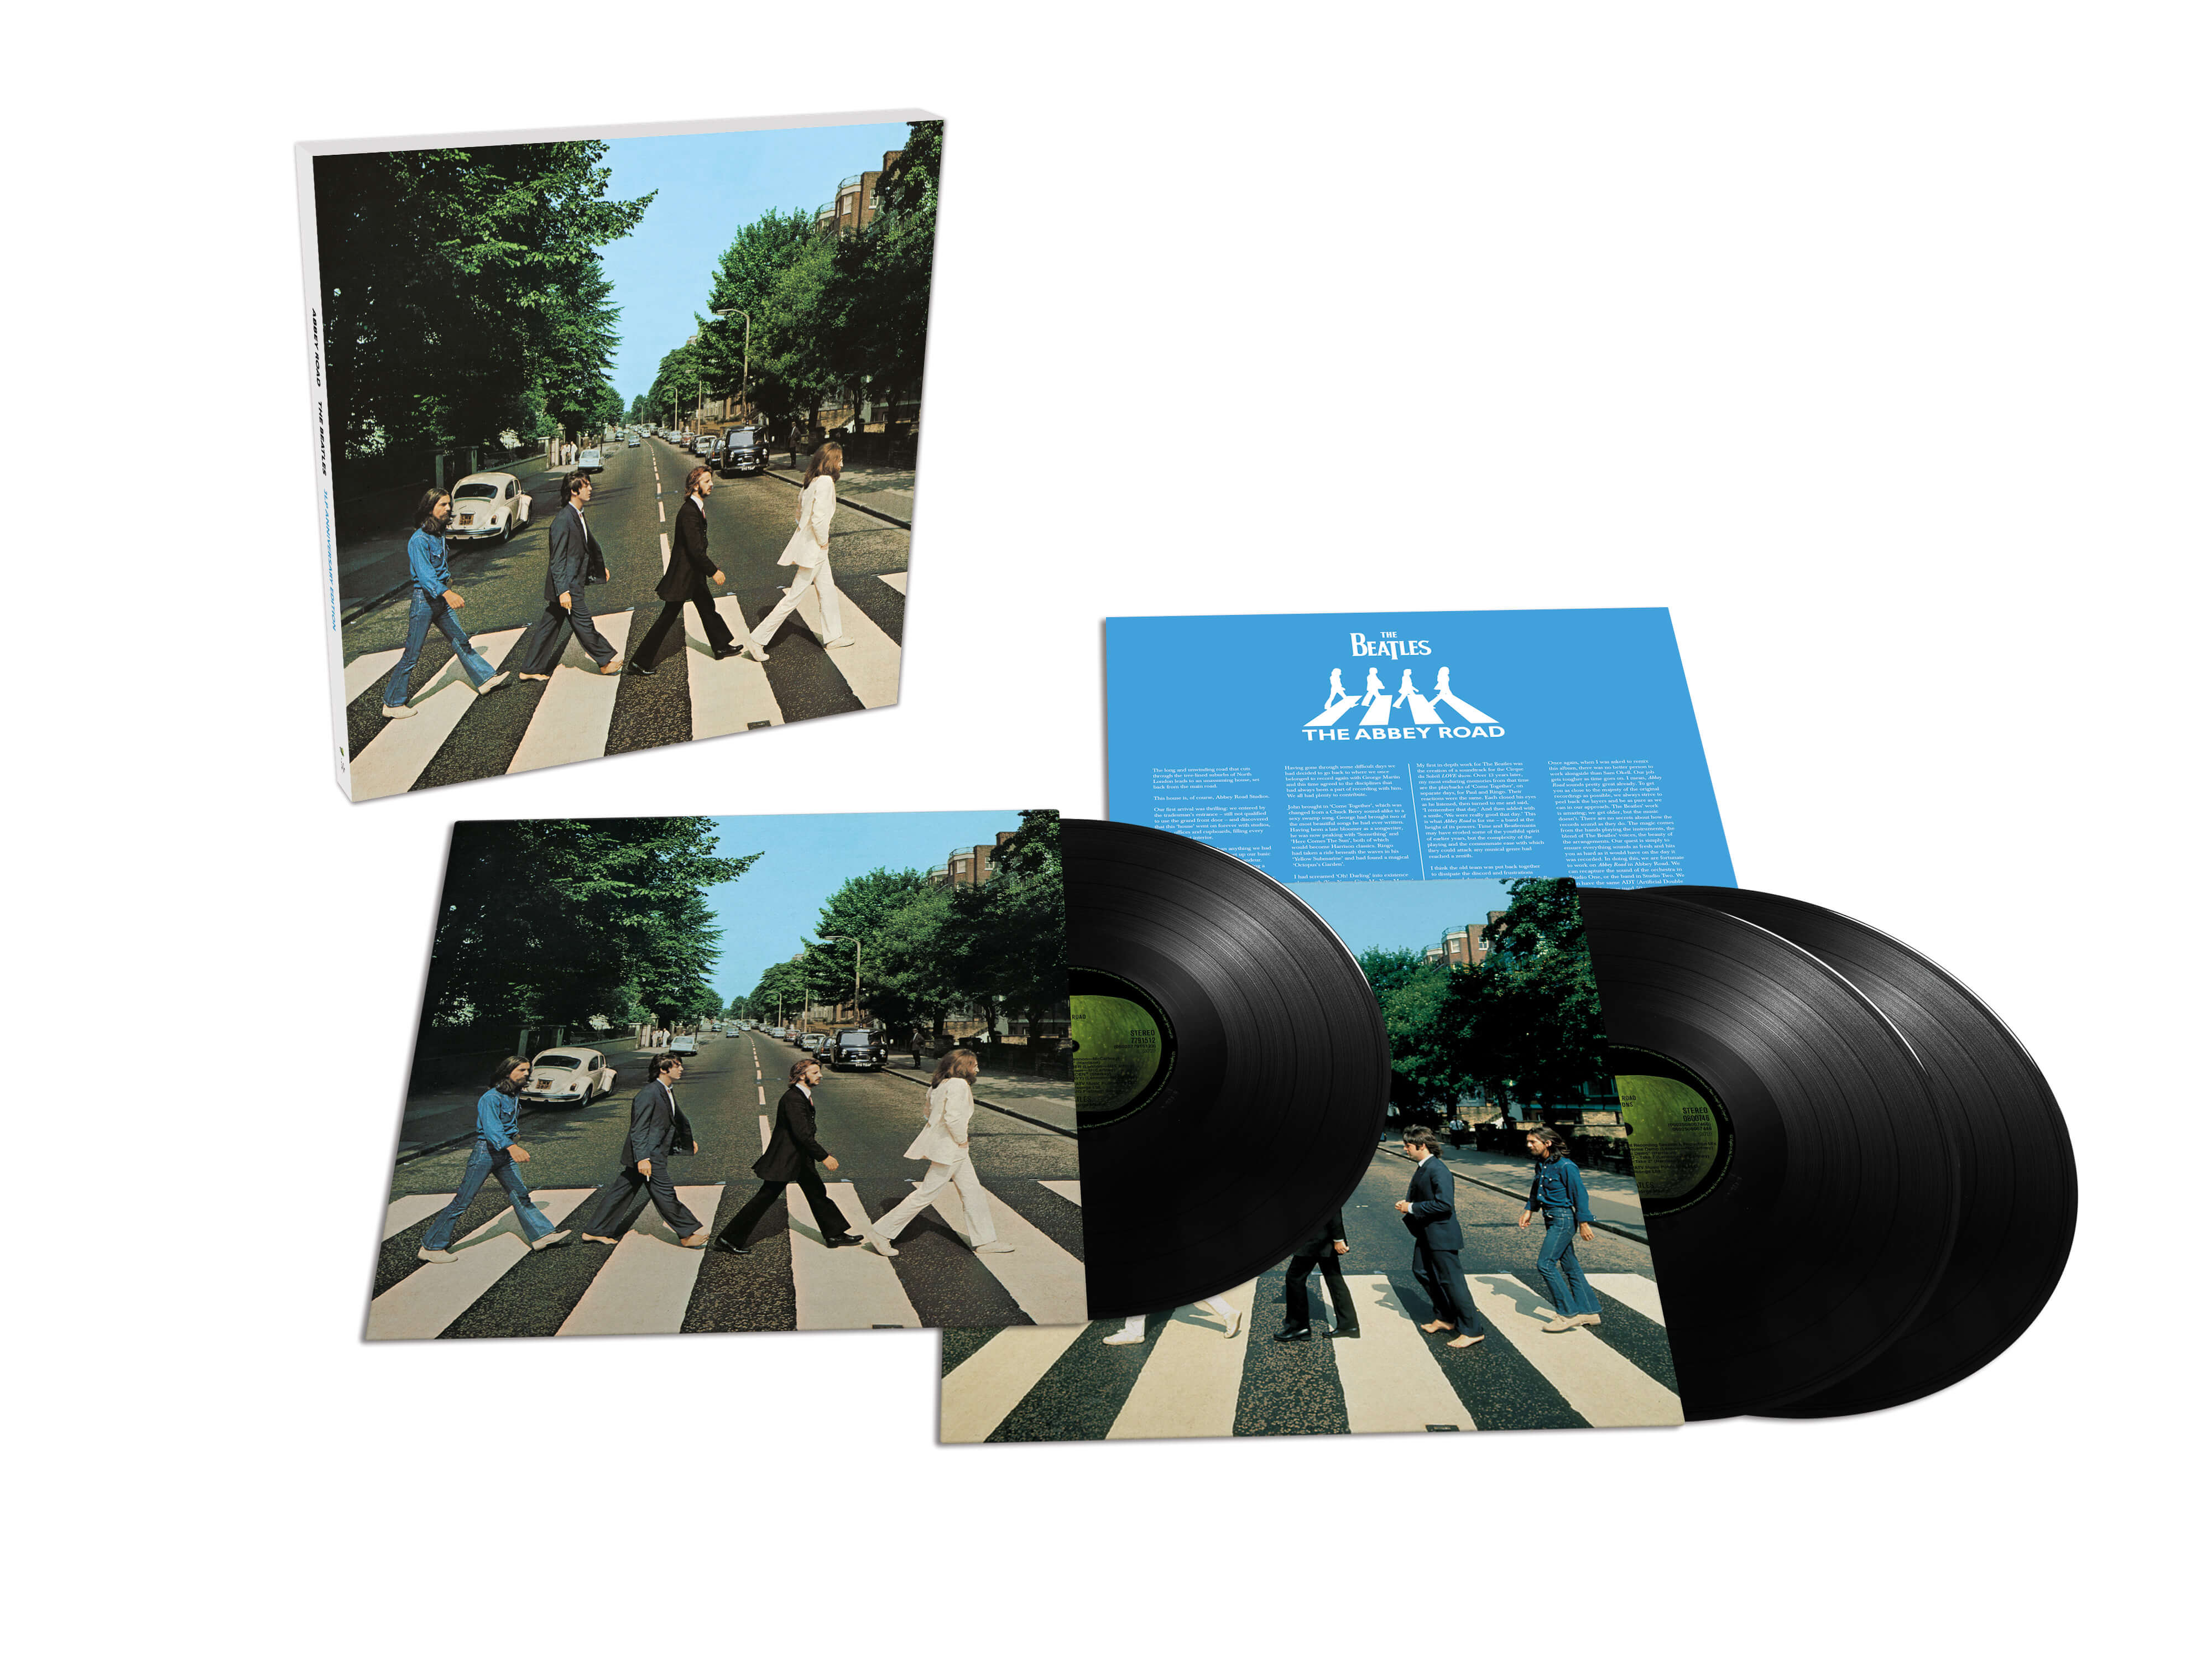 Imagen 2 - The Beatles - Reedita Abbey Road - Aniversario